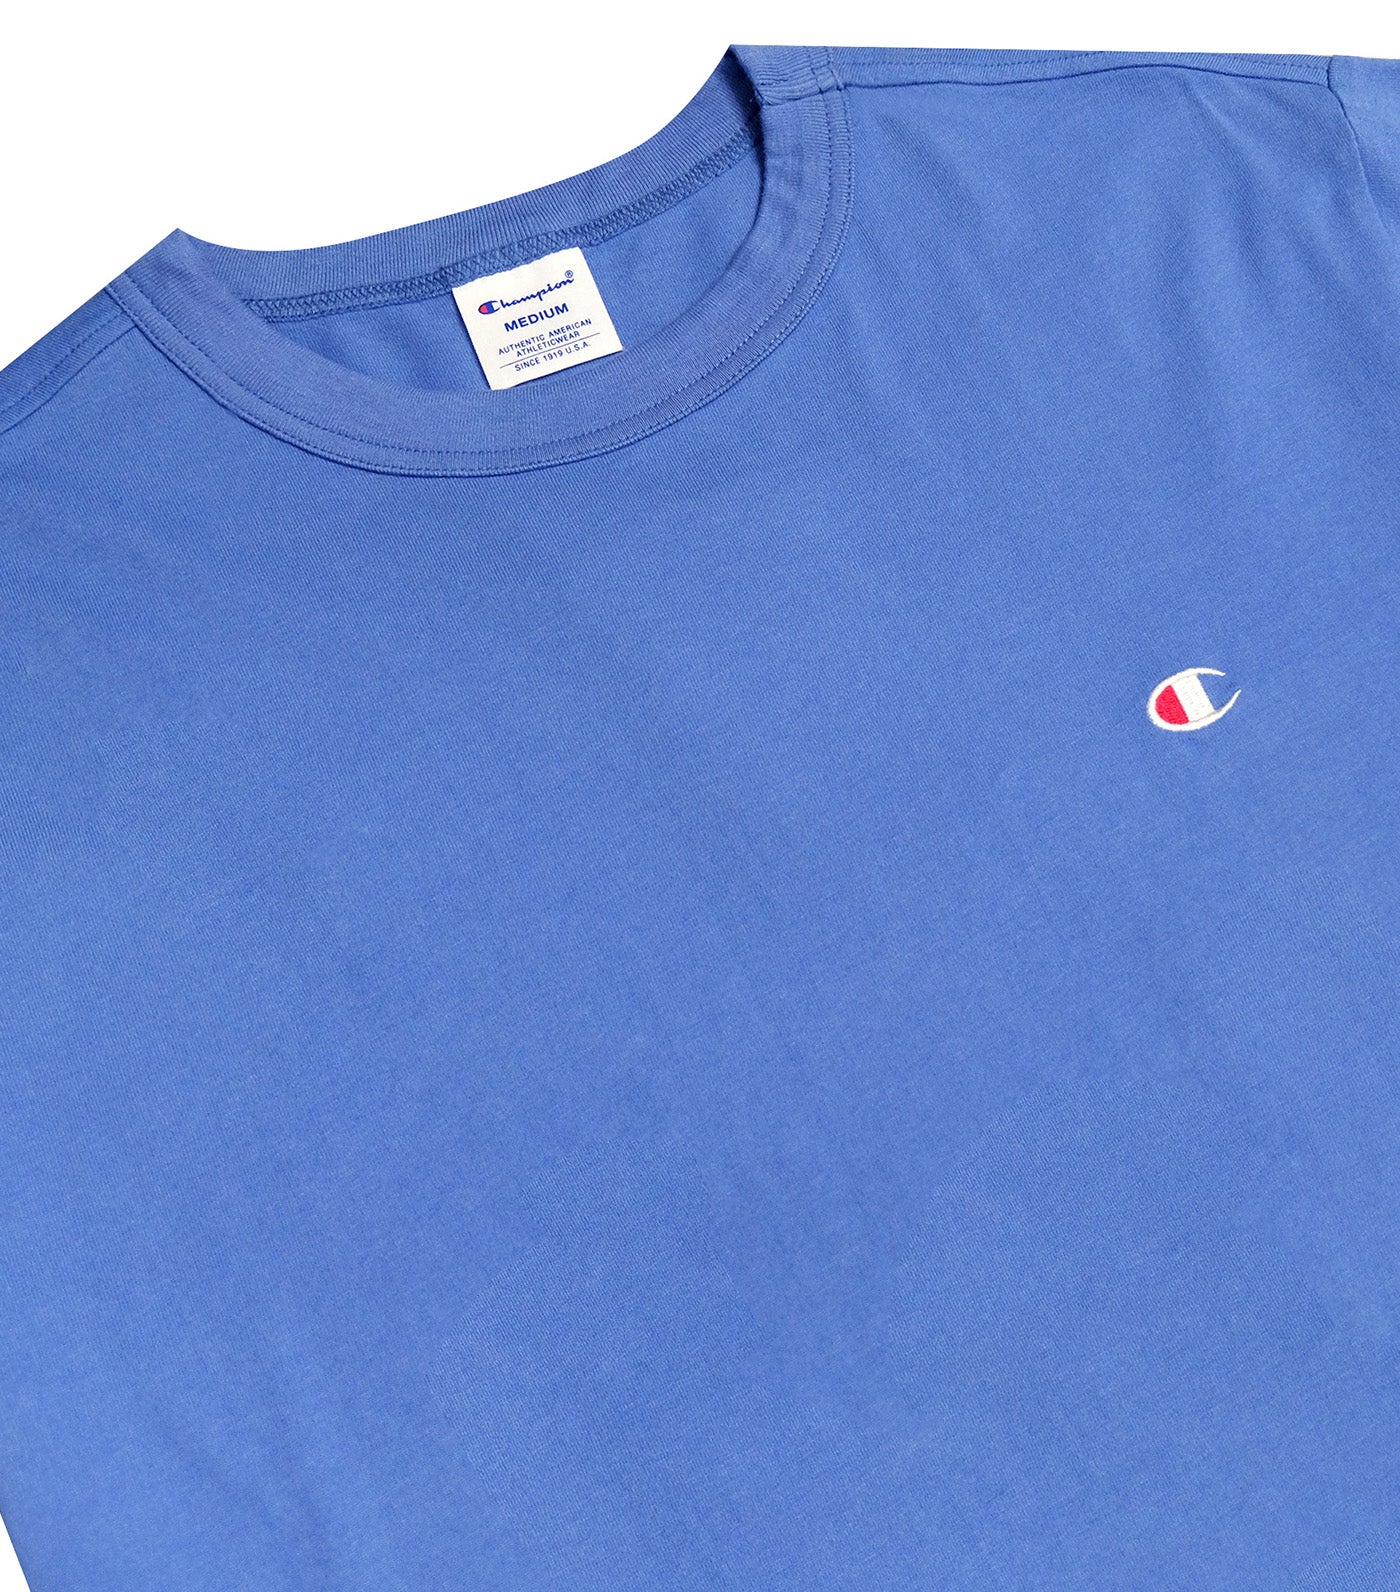 Japan Line Short Sleeve T-Shirt Slate Blue